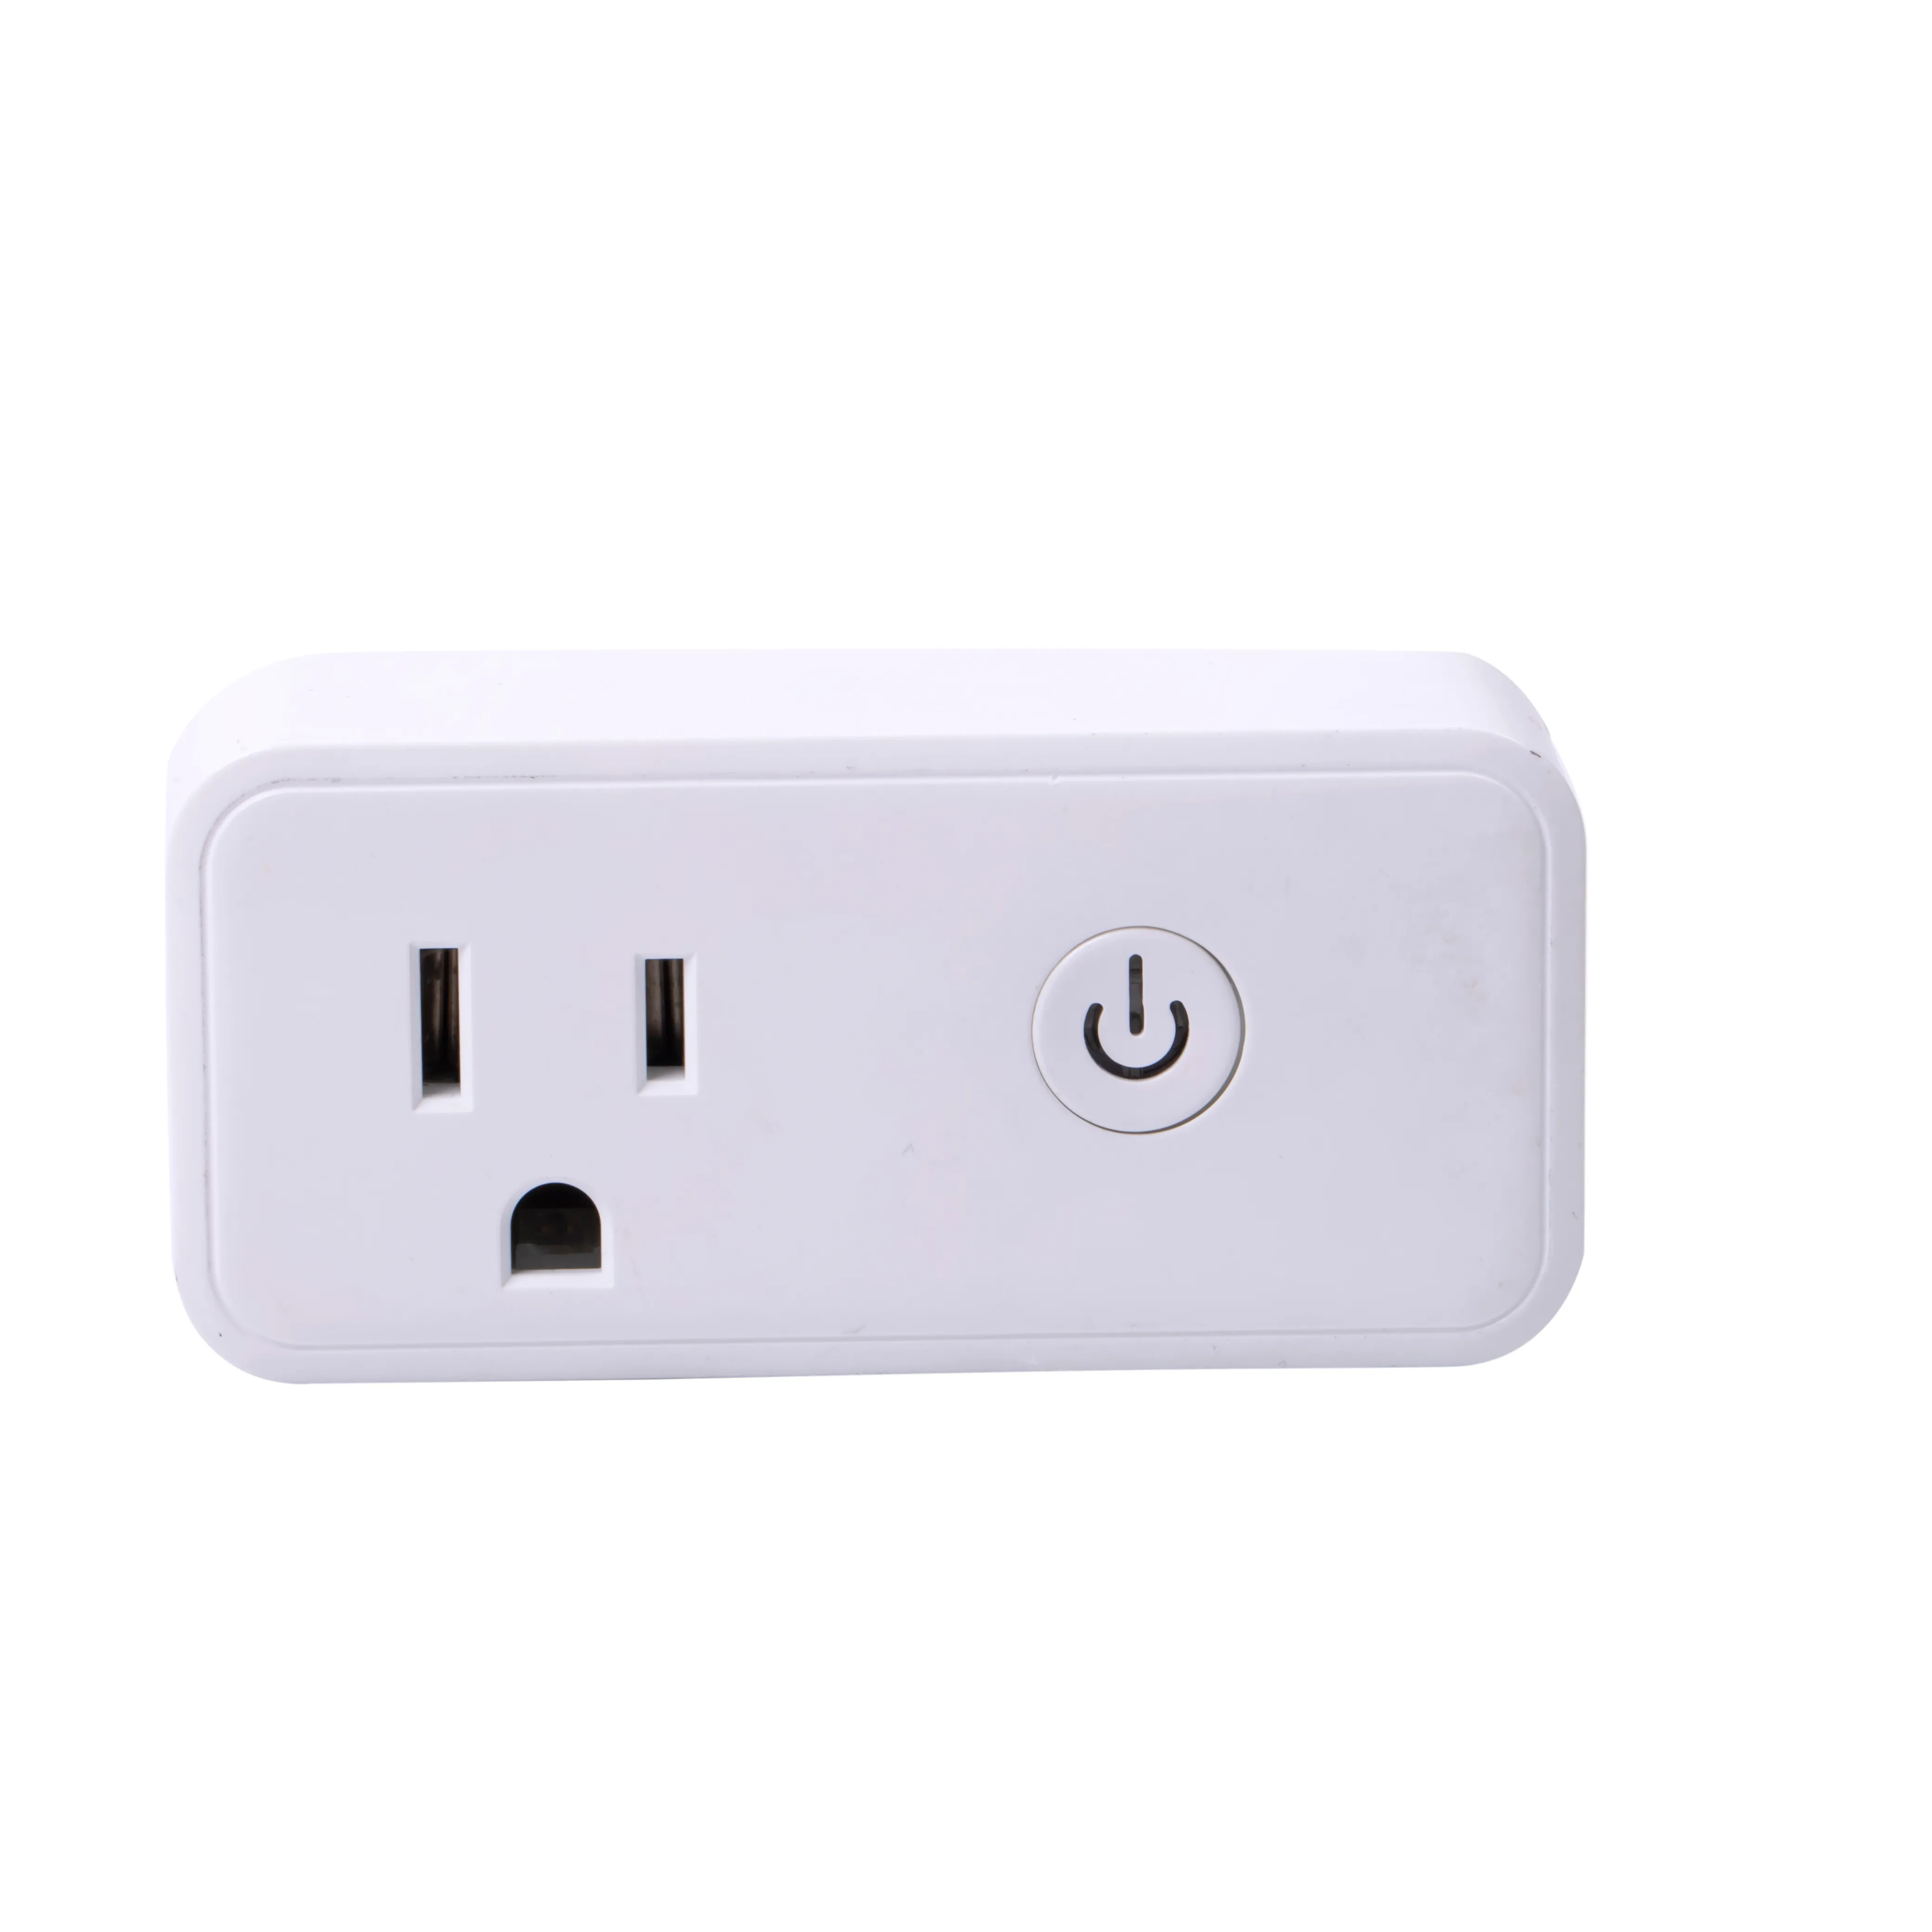 Wireless WIFI Plug Smart Home Power Sockets WiFi Smart Socket, US plug